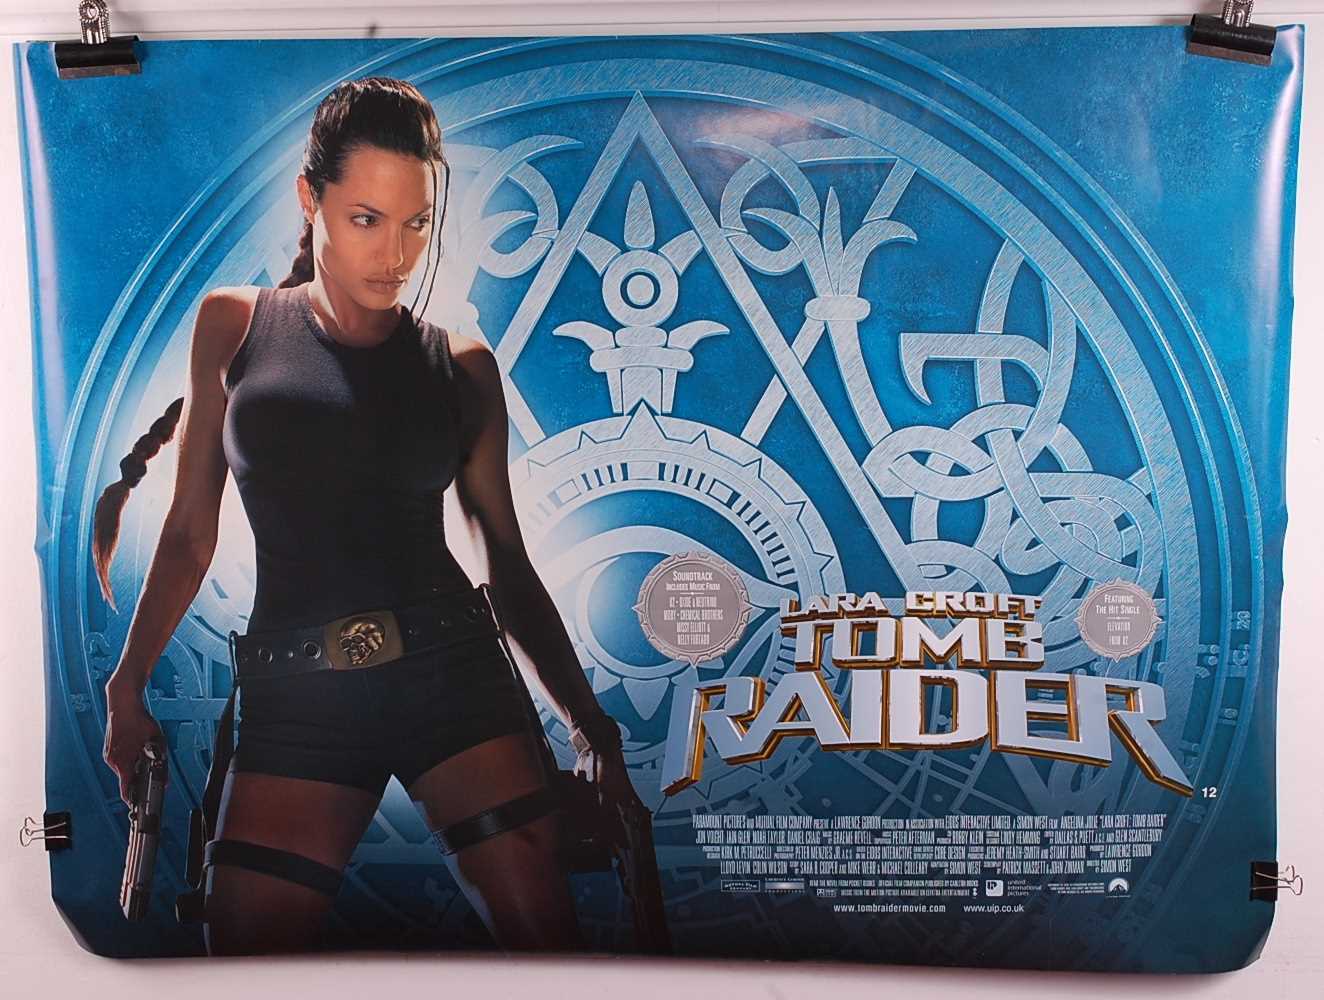 tomb raider 2001 poster